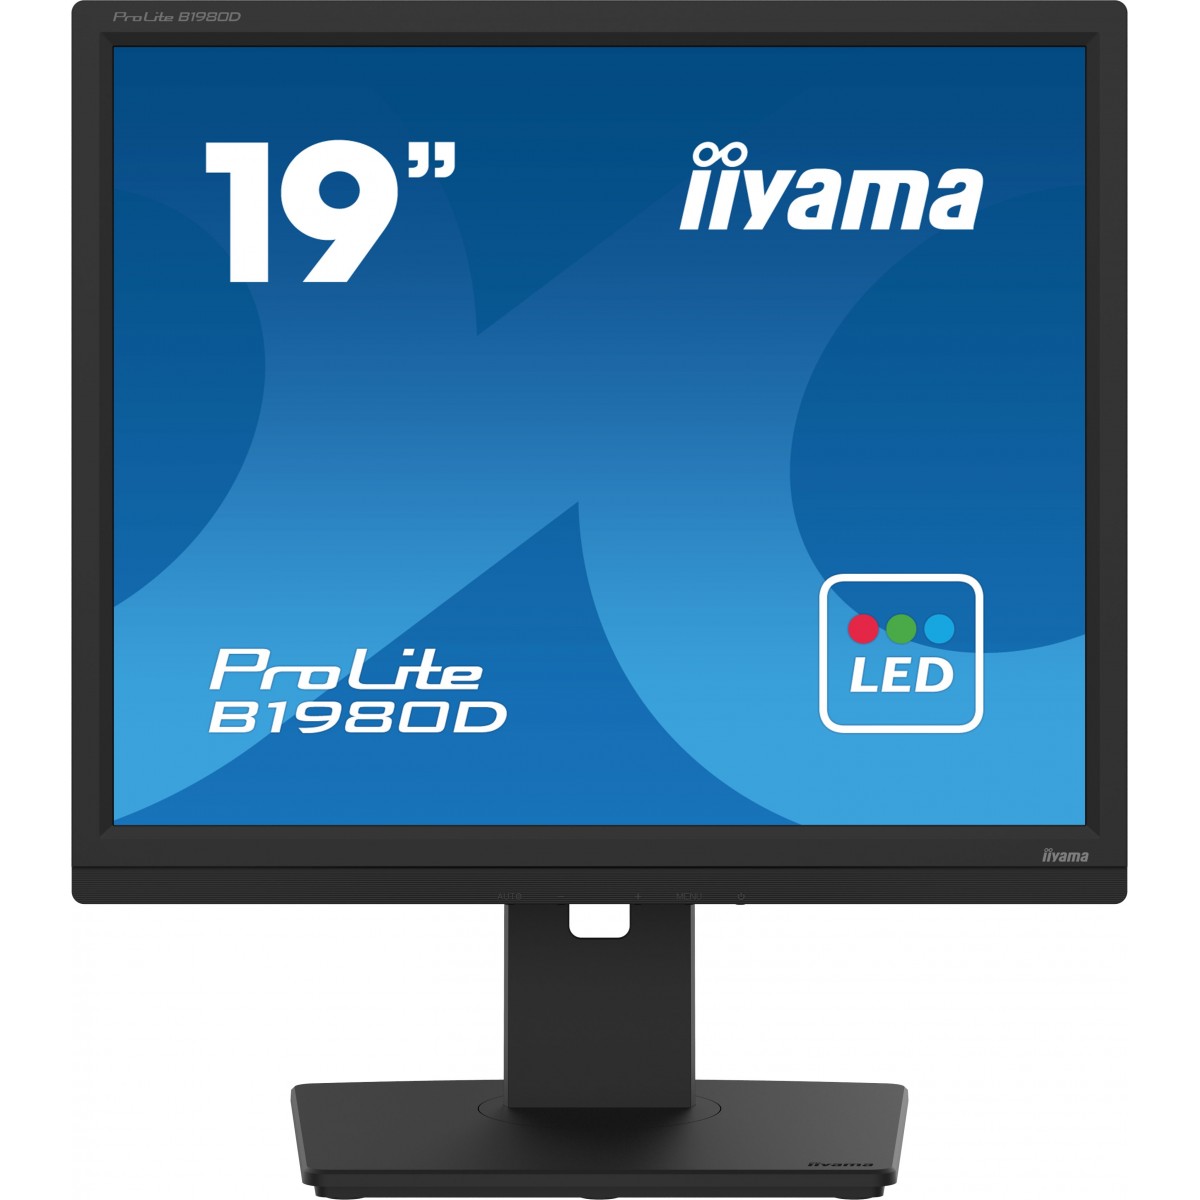 Iiyama 48.0cm 19 B1980D-B5 5 4 VGA+DVI Lift black retail - Flat Screen - 48 cm